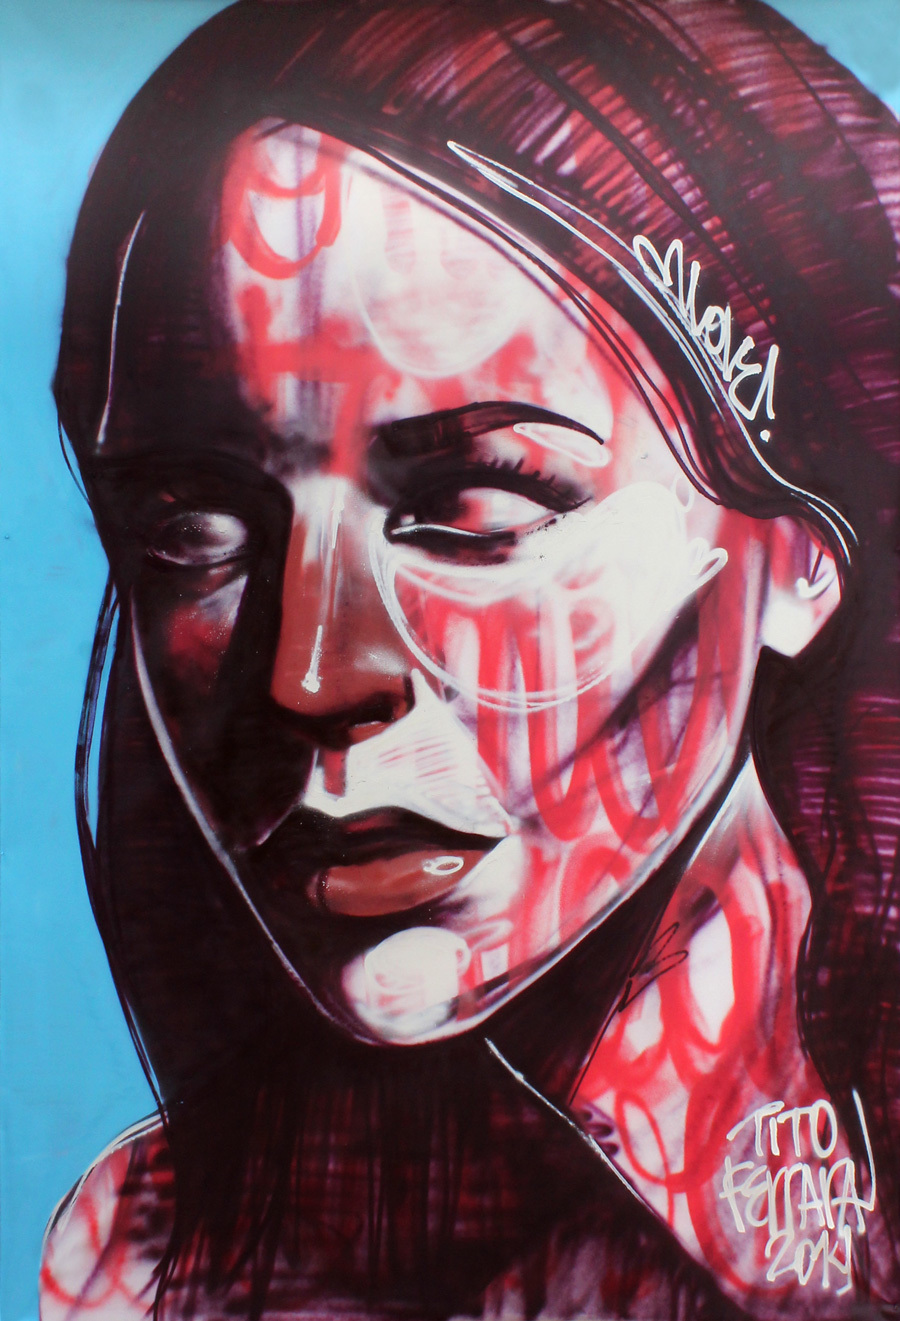 tito-ferrara-graffiti-pintura-sp-arte-de-rua-28